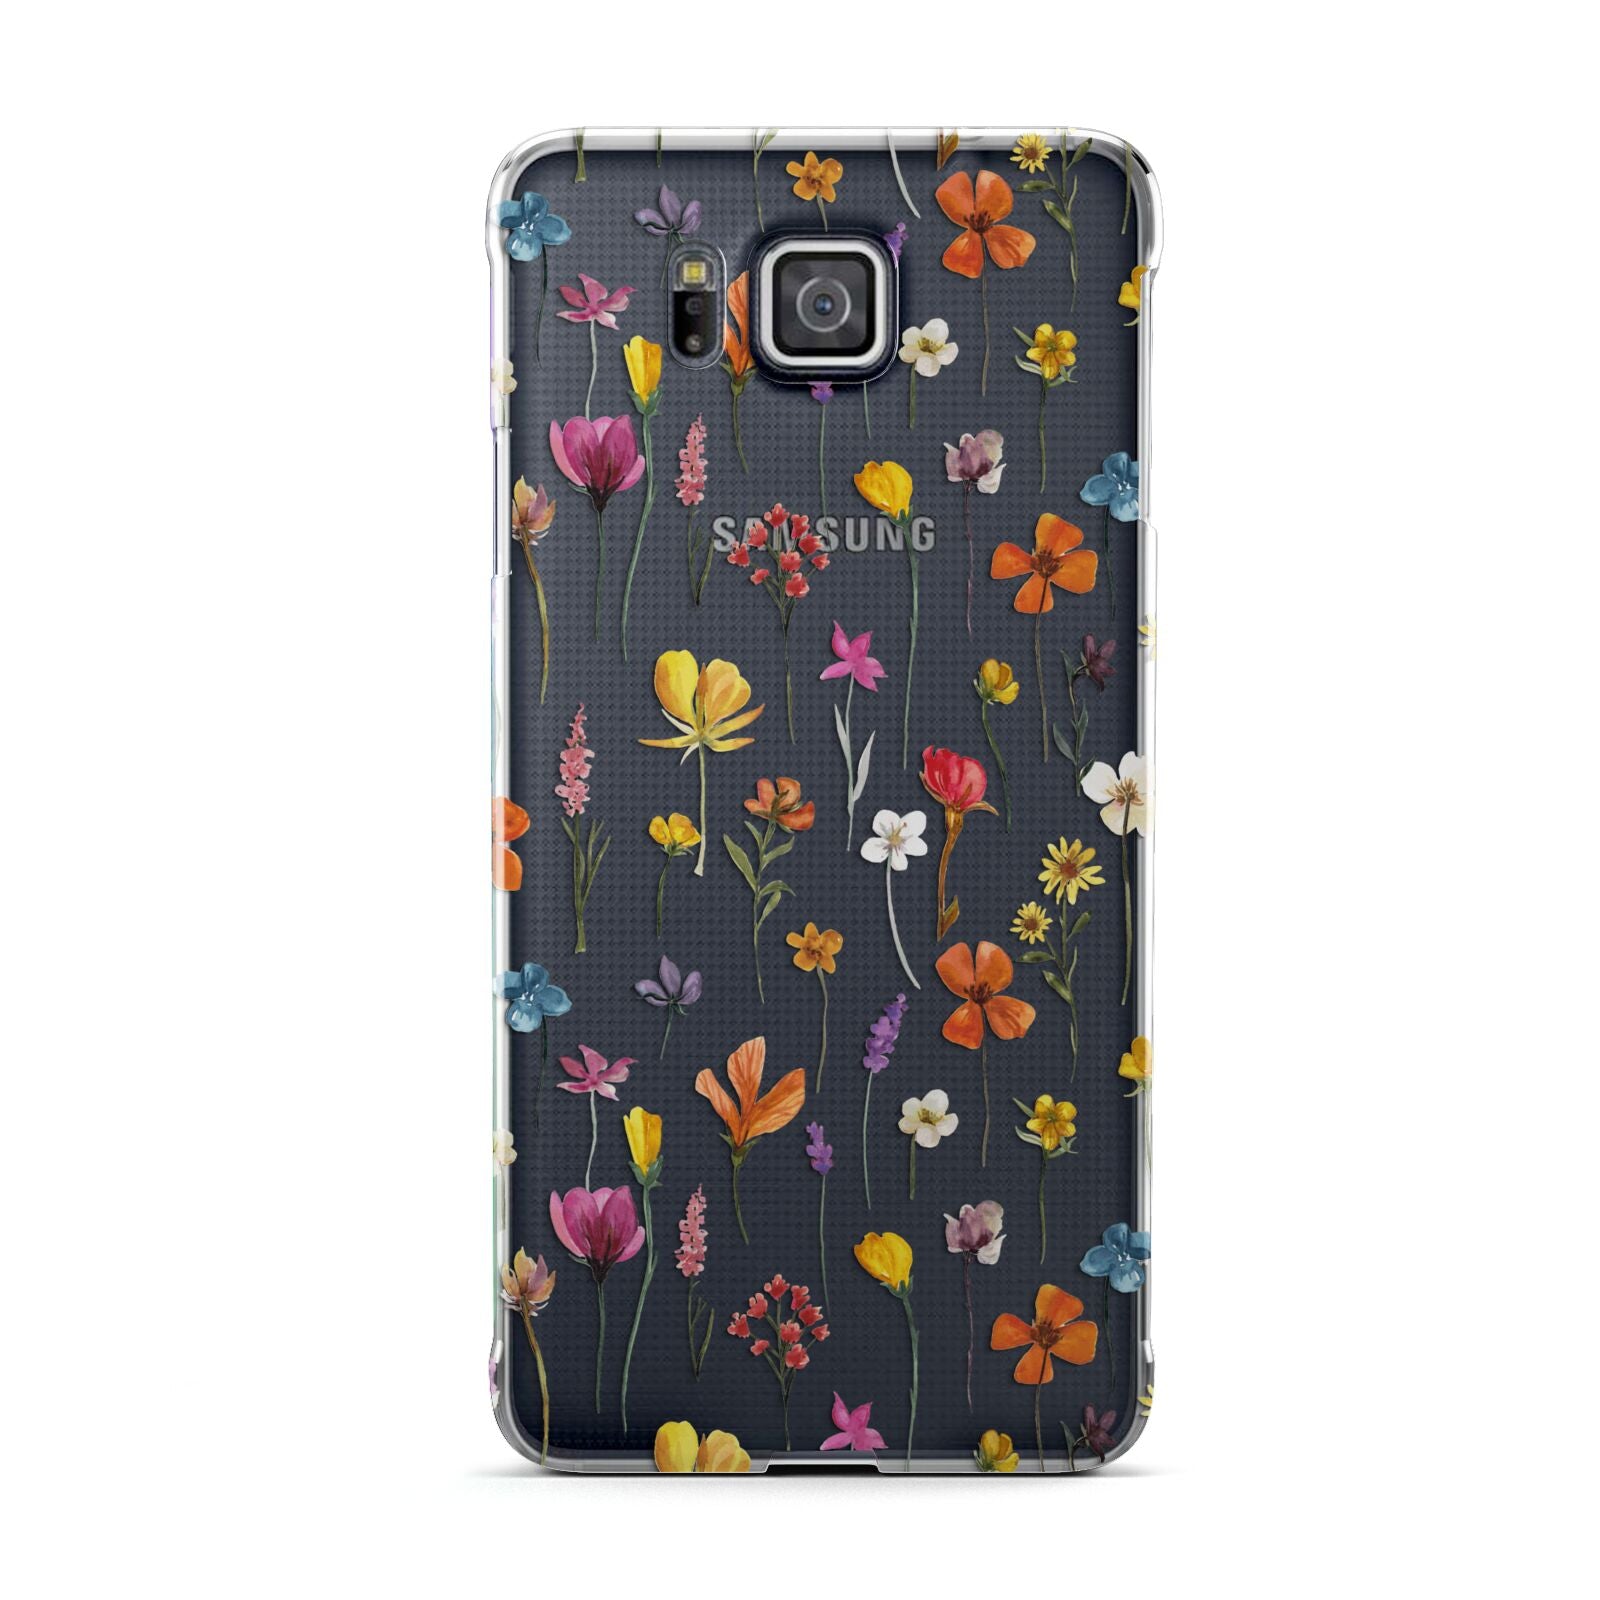 Botanical Floral Samsung Galaxy Alpha Case